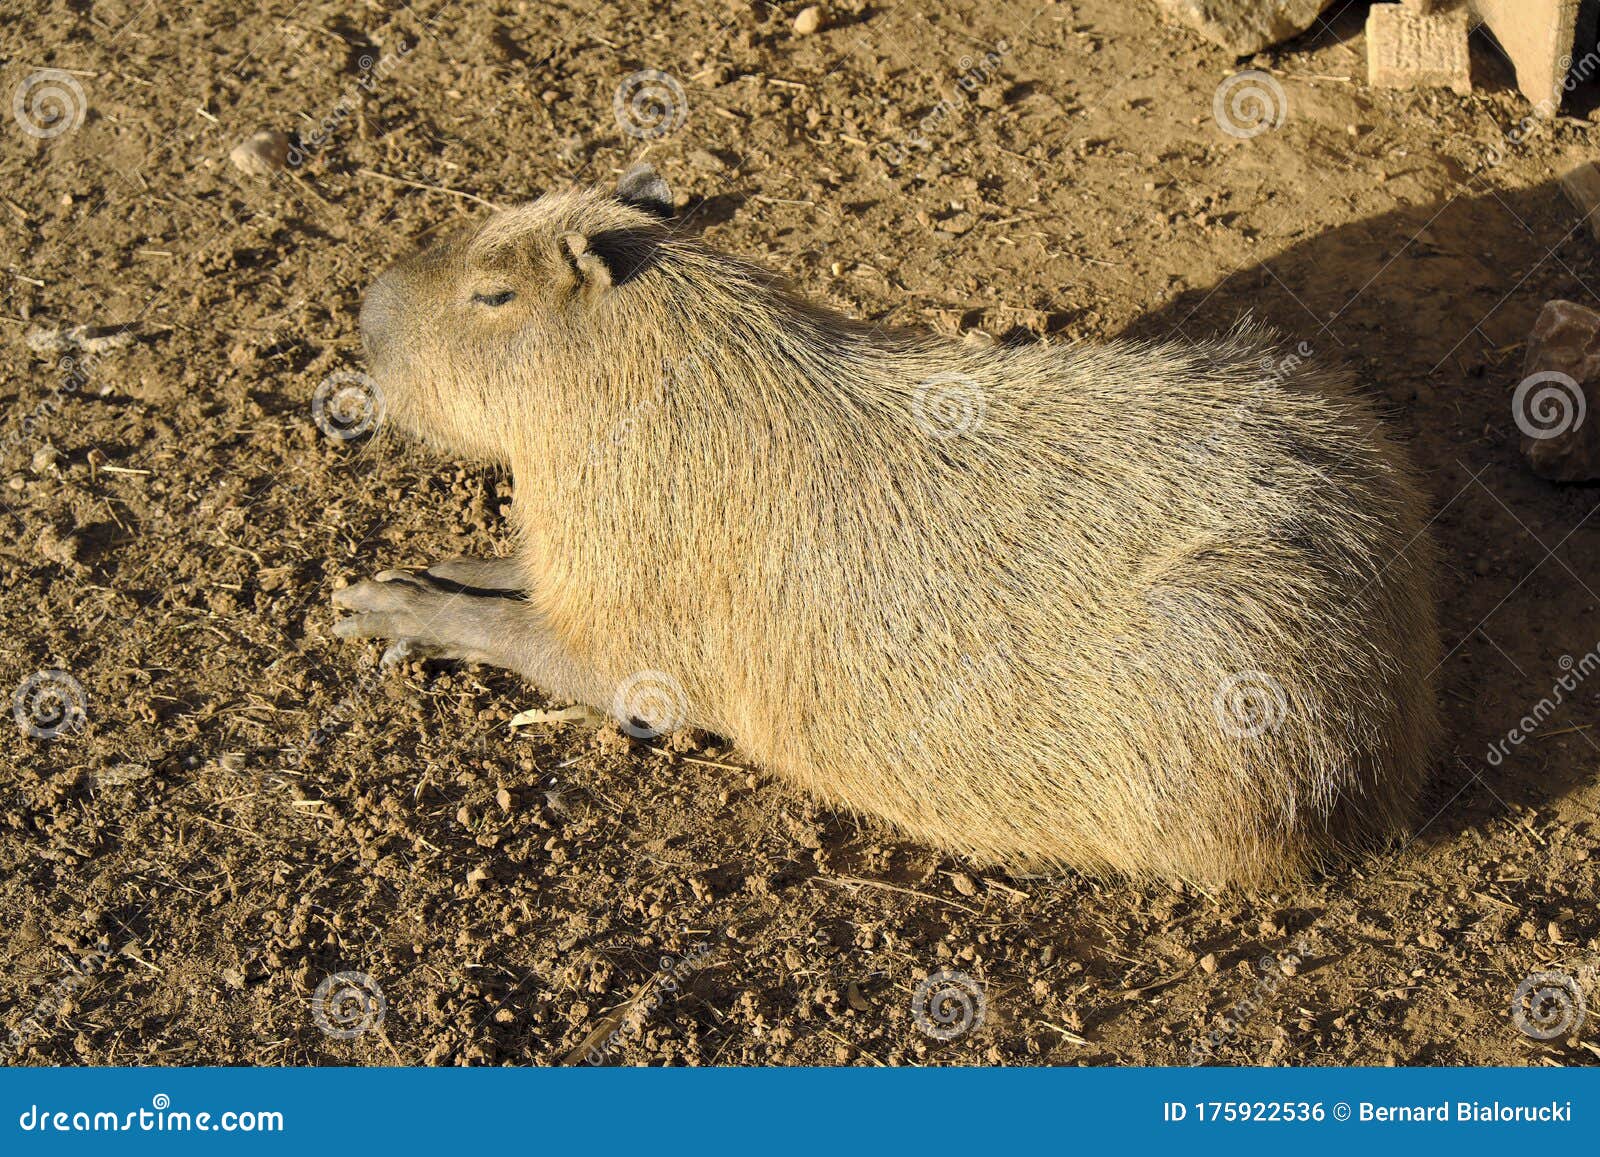 single capybara, known also as chiguire or carpincho, hydrochoerus hydrochaeris, in a zoological garden